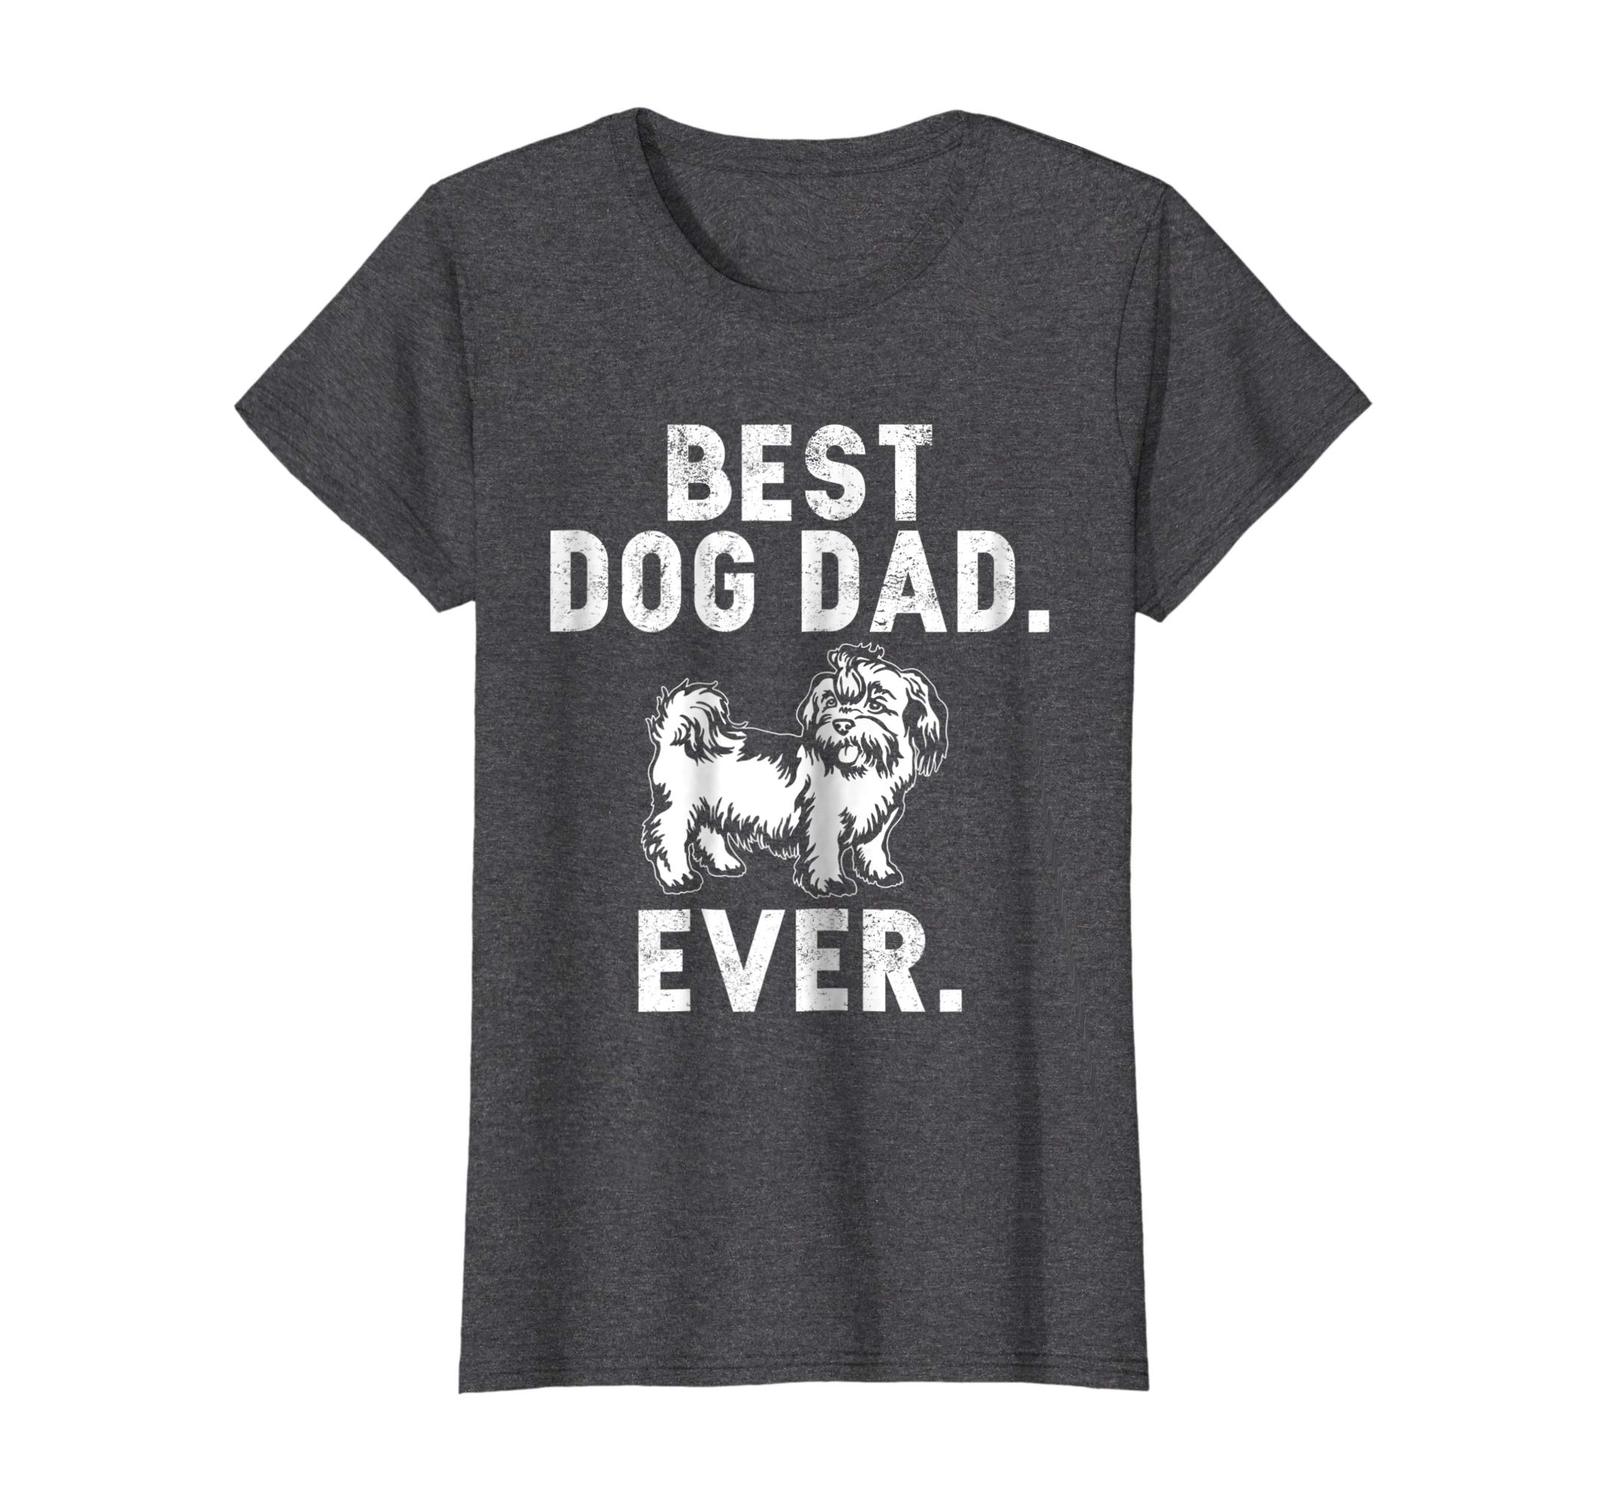 Dog Fashion - Best Dog Dad Ever T shirt - Funny Shih Tzus Pups Wowen